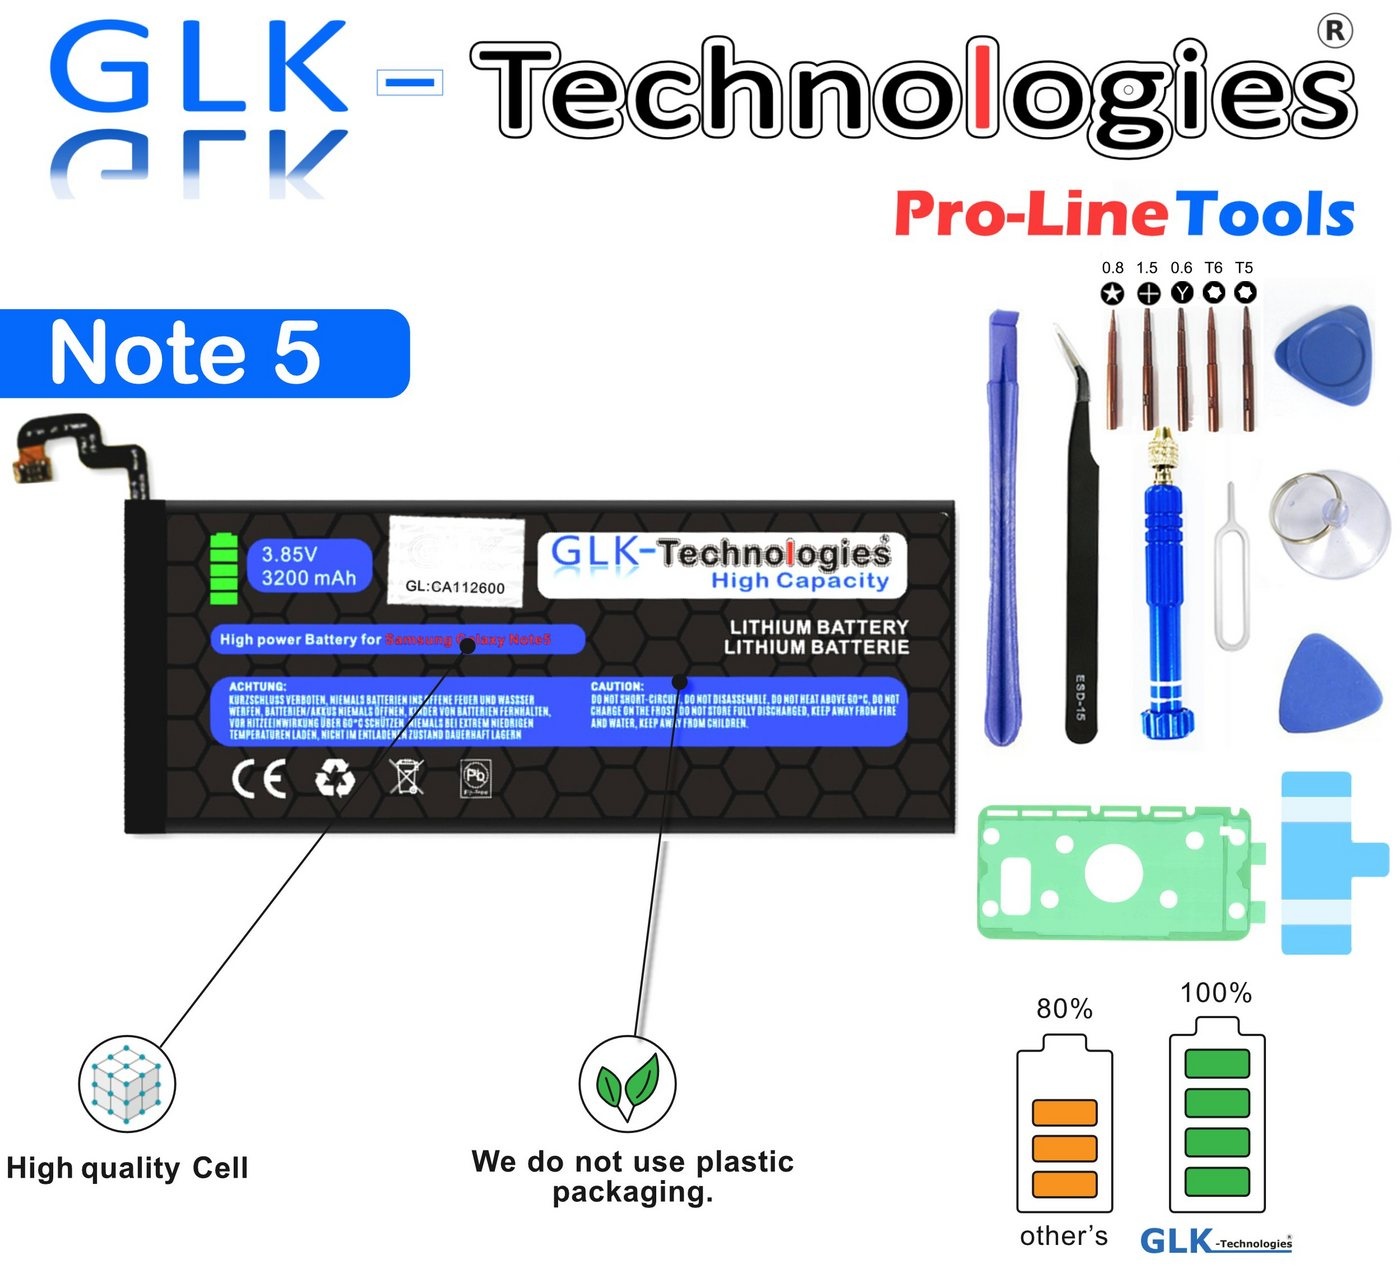 GLK-Technologies High Power Ersatzakku kompatibel mit Samsung Galaxy Note 5 SM-N920 EB-BN920ABA, Original GLK-Technologies Battery, accu, 3200 mAh Akku, inkl. Werkzeug Set Smartphone-Akku 3200 mAh (3.8 V)